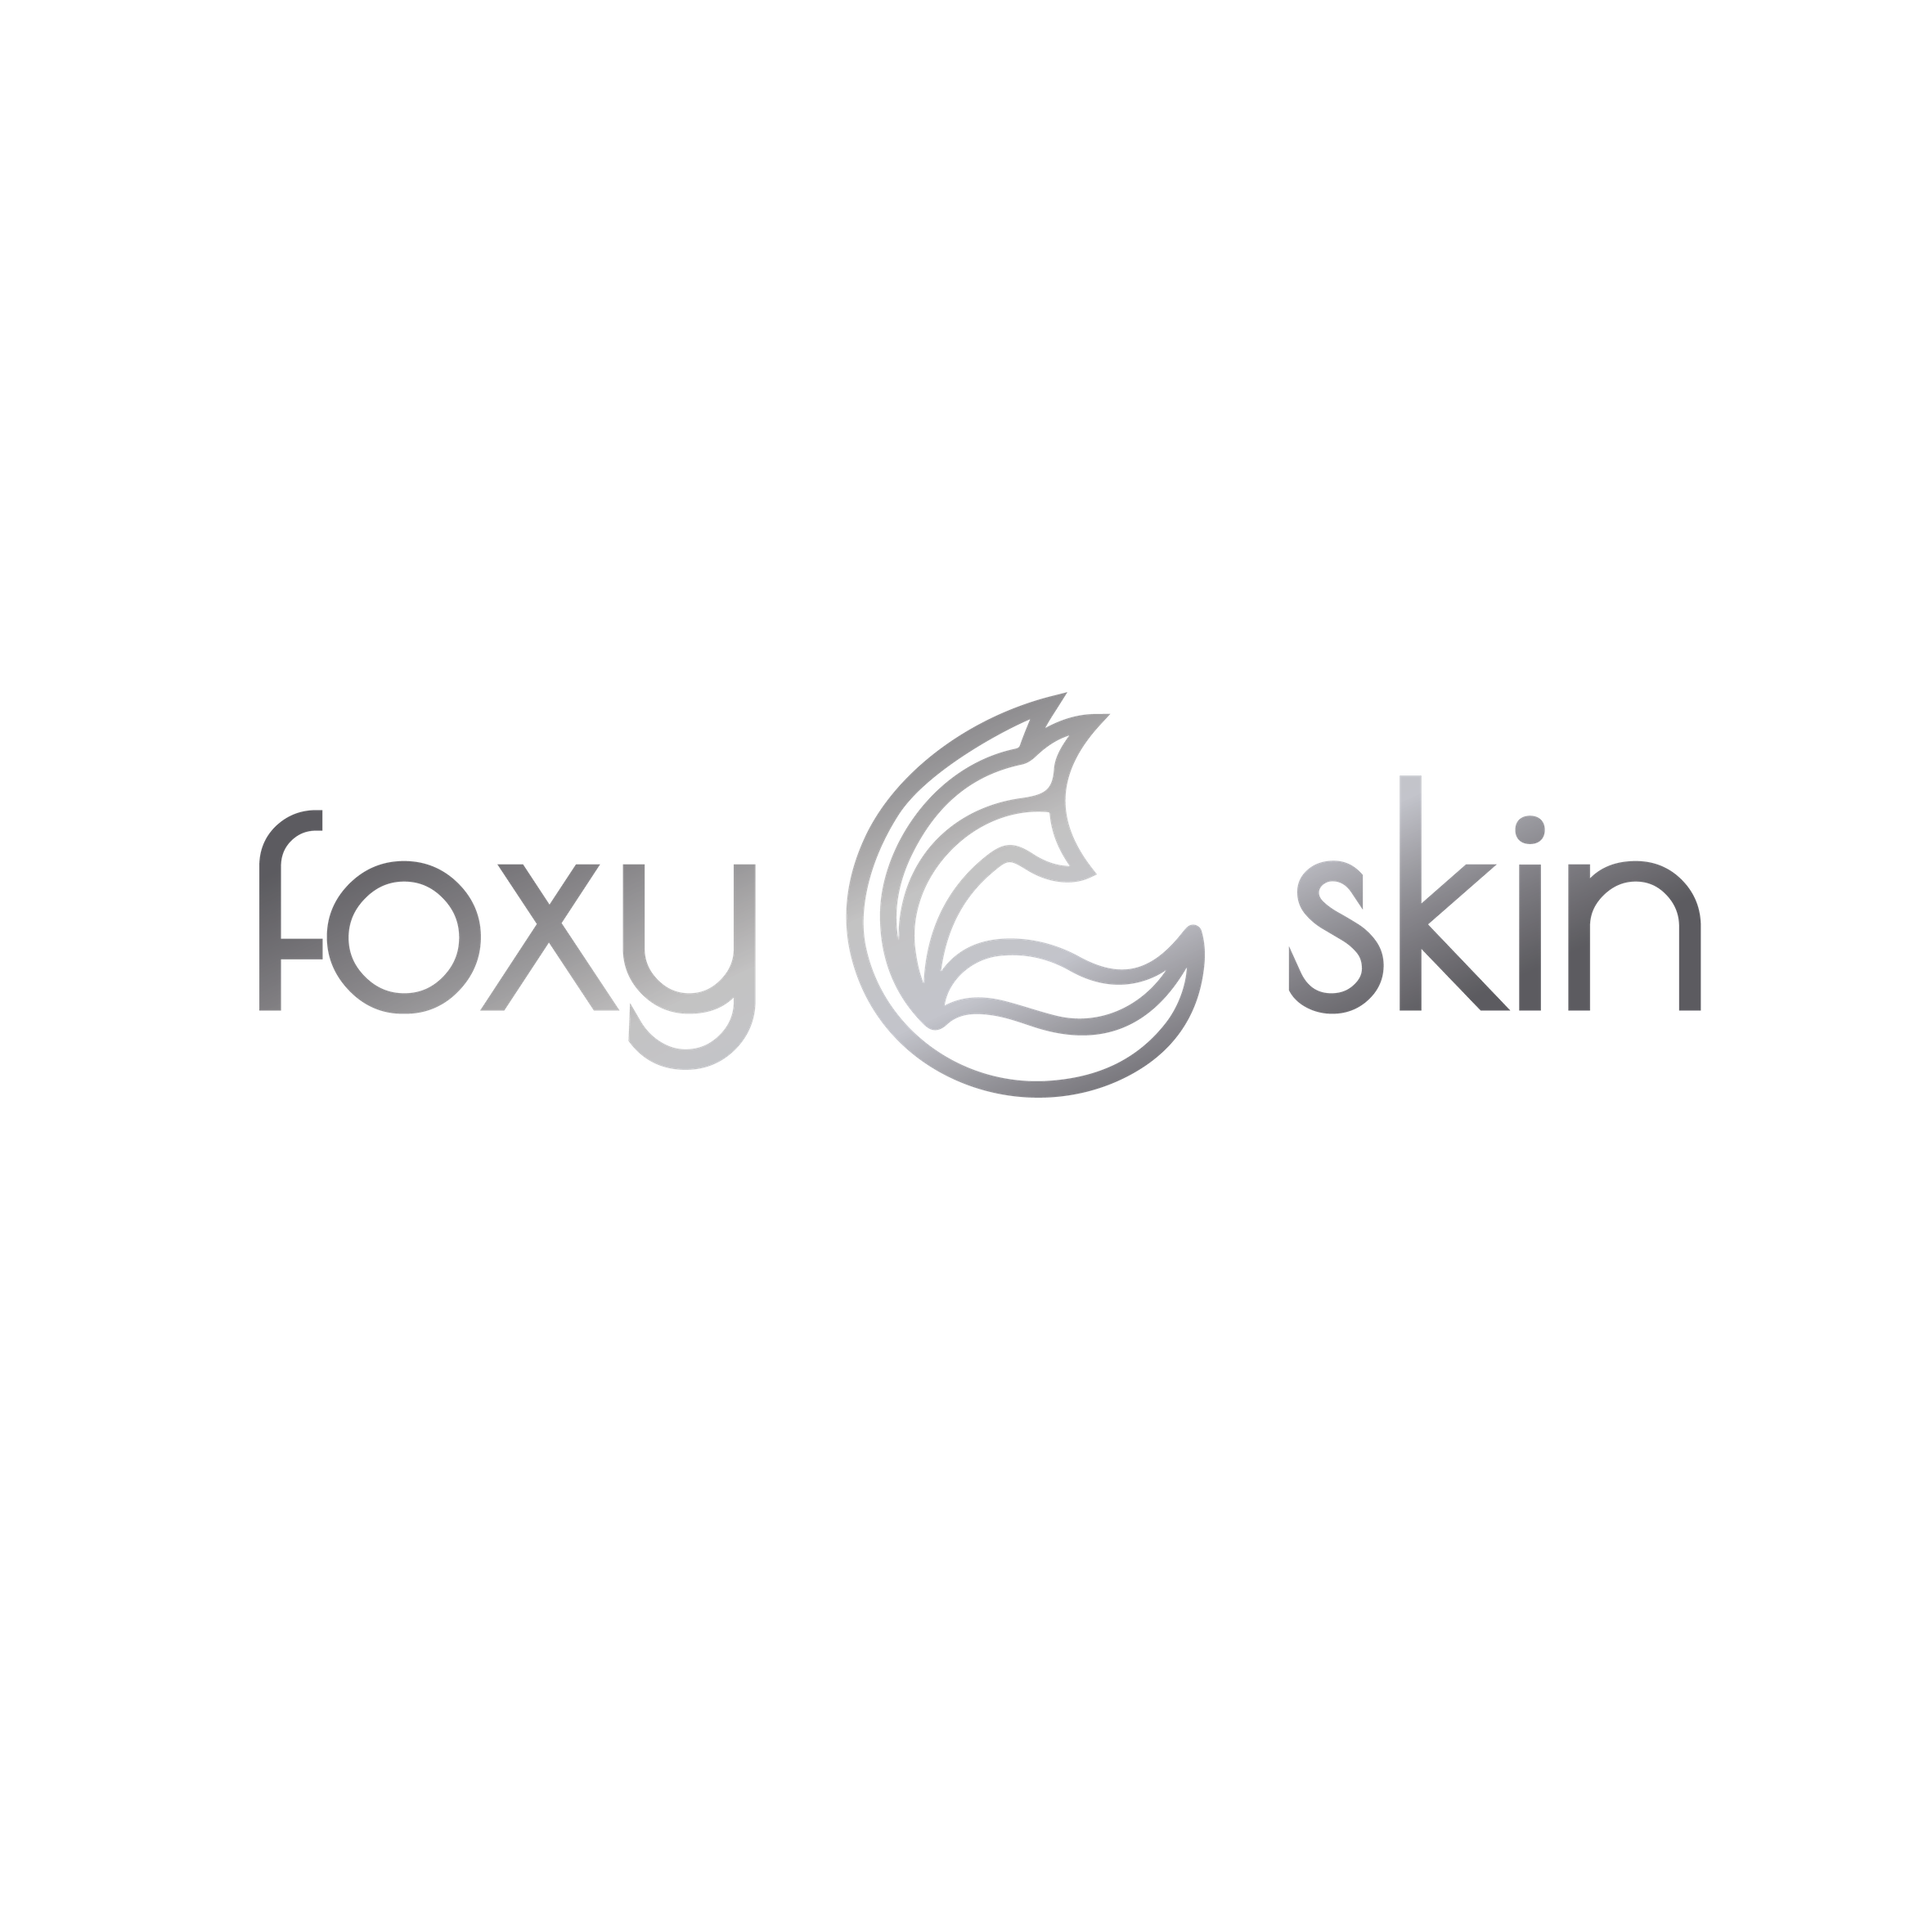 fosxy skin logo 1 silver-01.png